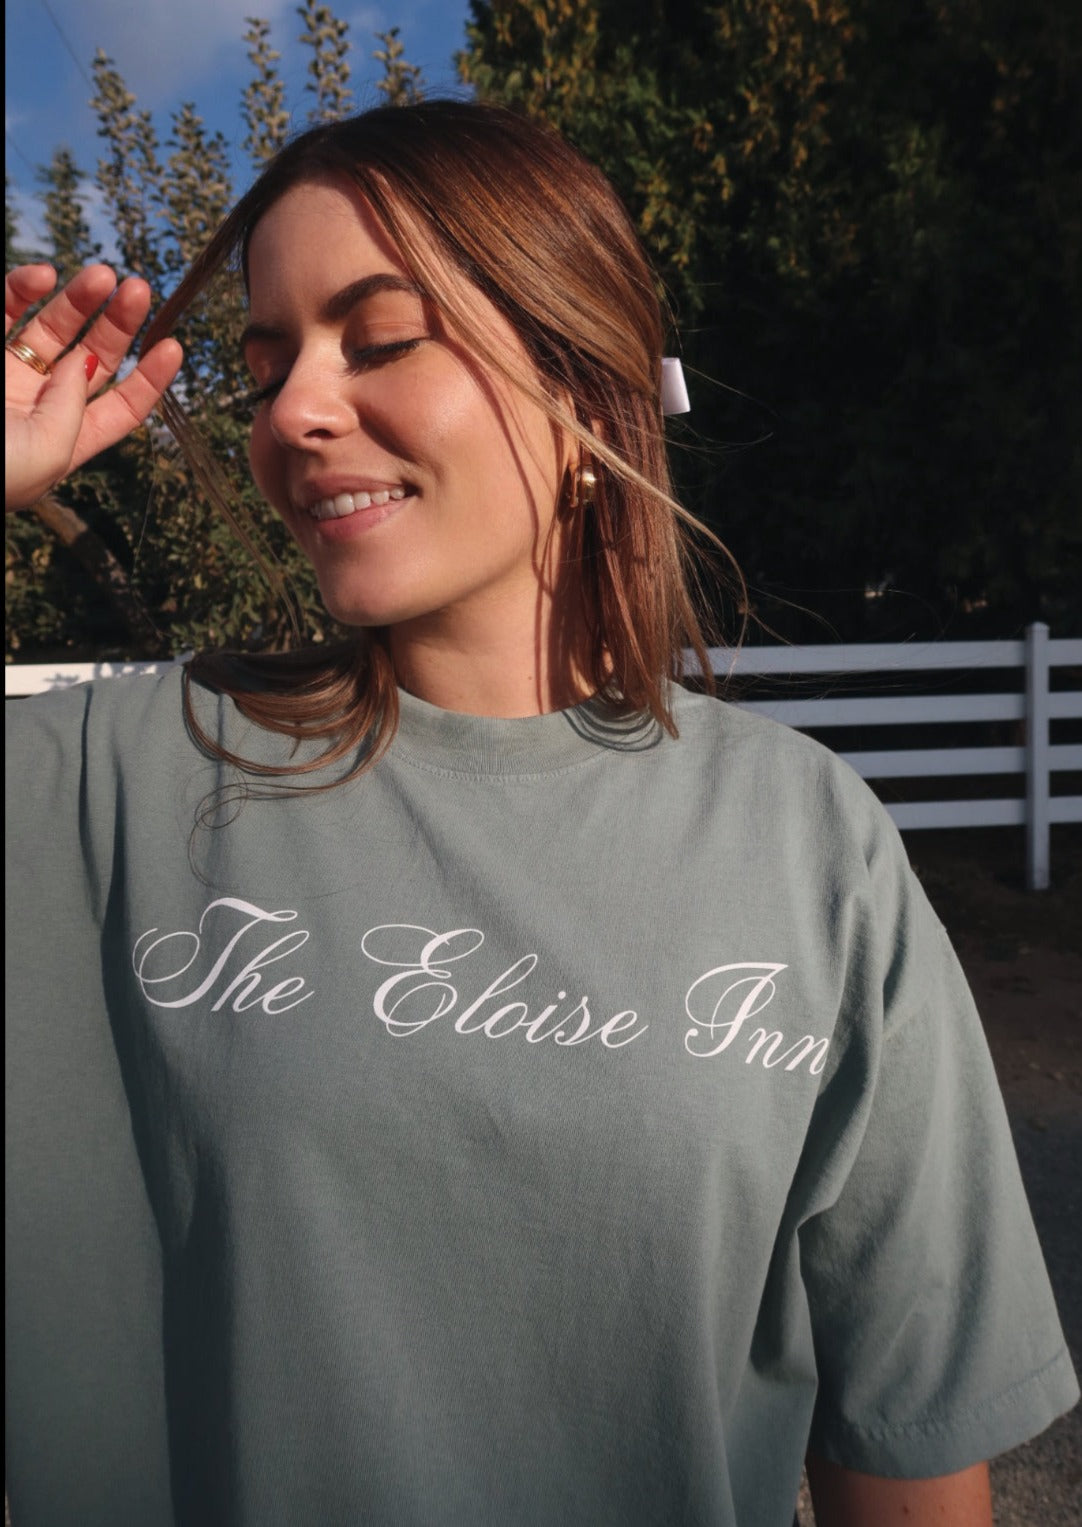 The Eloise Inn 'Boxy' T-Shirt